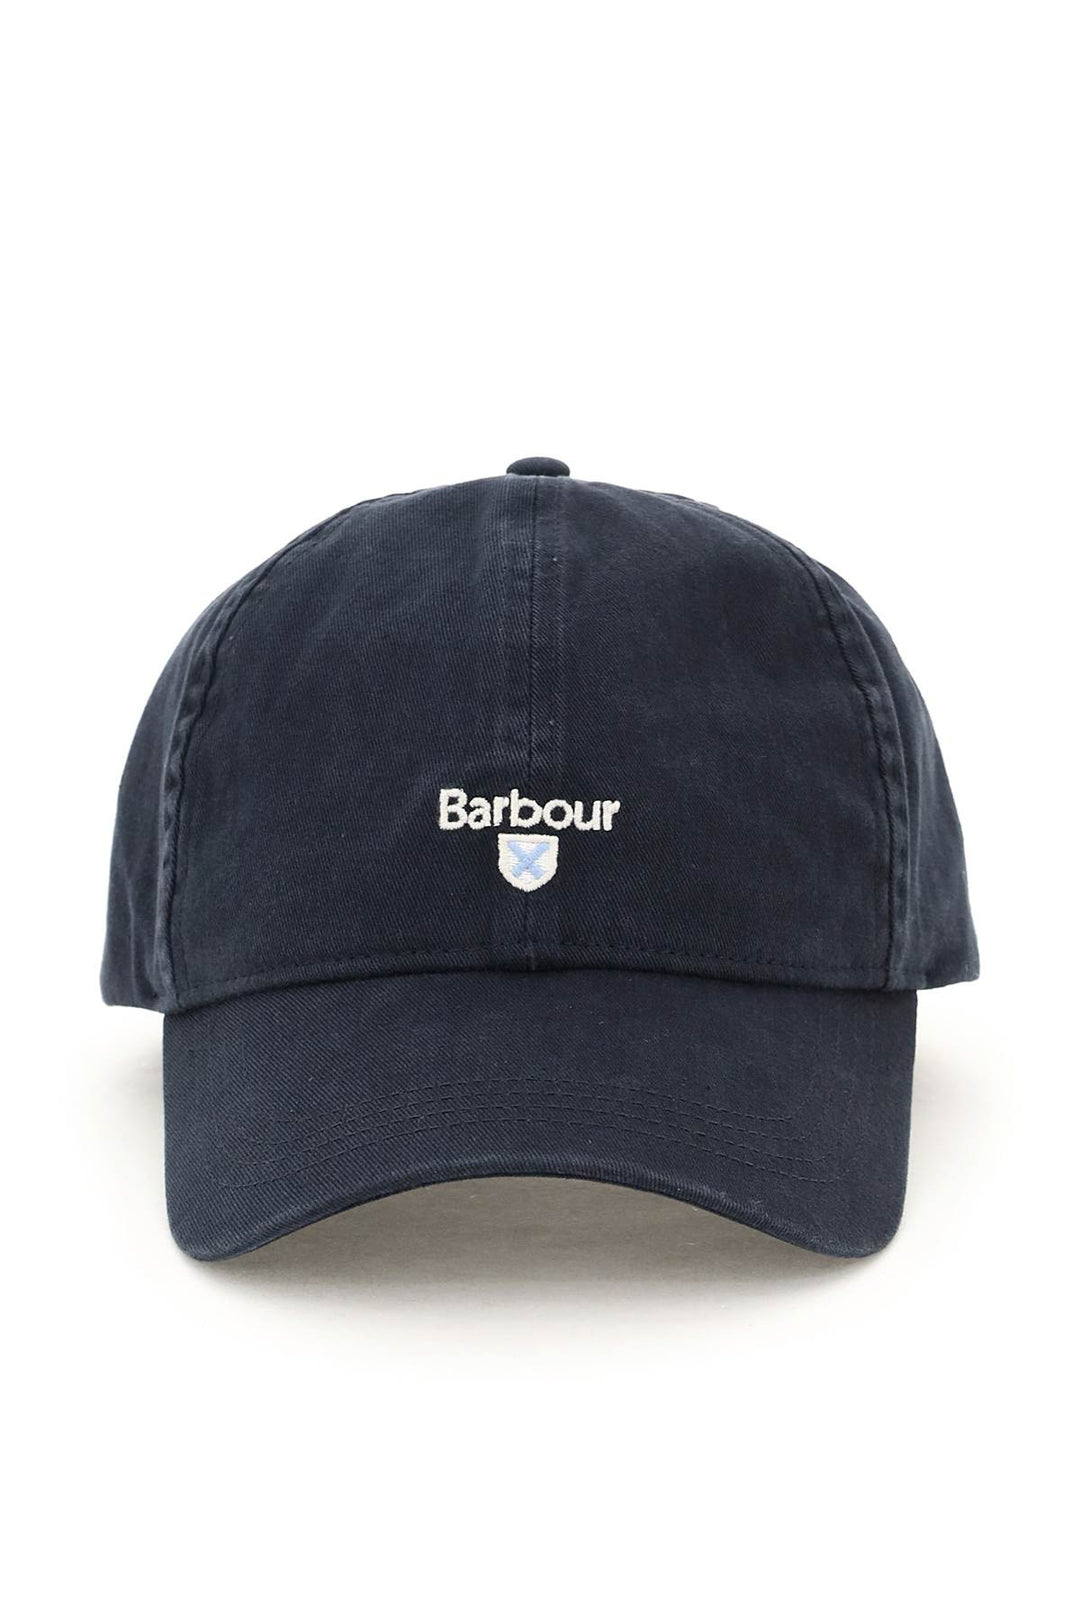 Barbour Cascade Baseball Cap   Blu